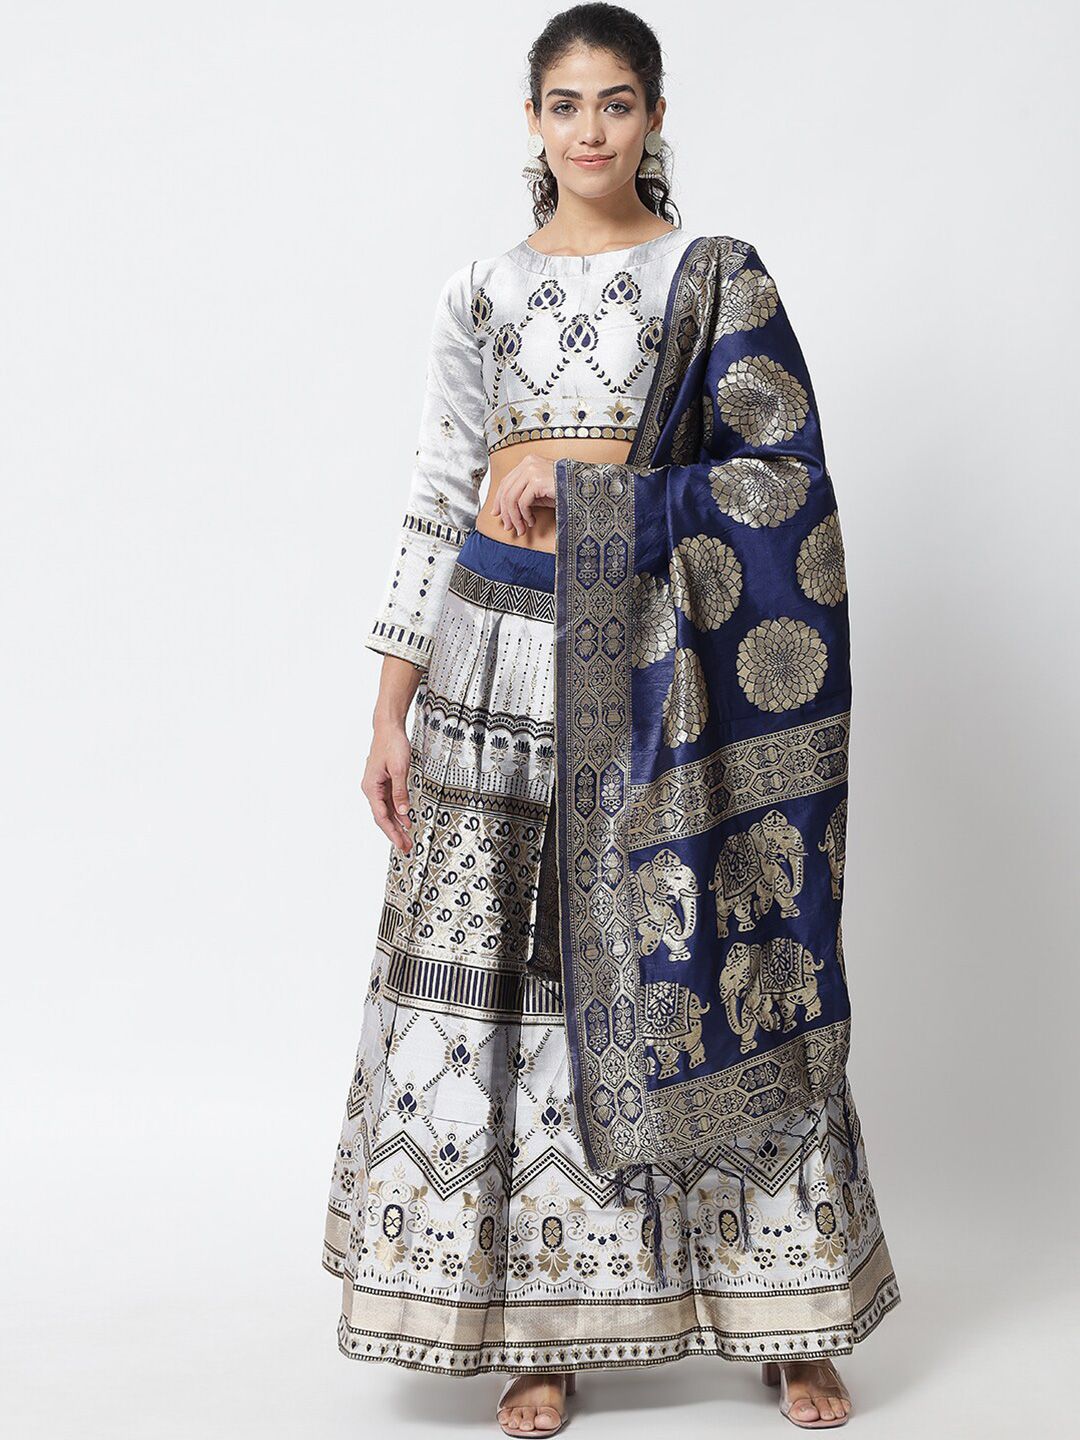 DIVASTRI White & Blue Printed Semi-Stitched Lehenga & Unstitched Blouse With Dupatta Price in India